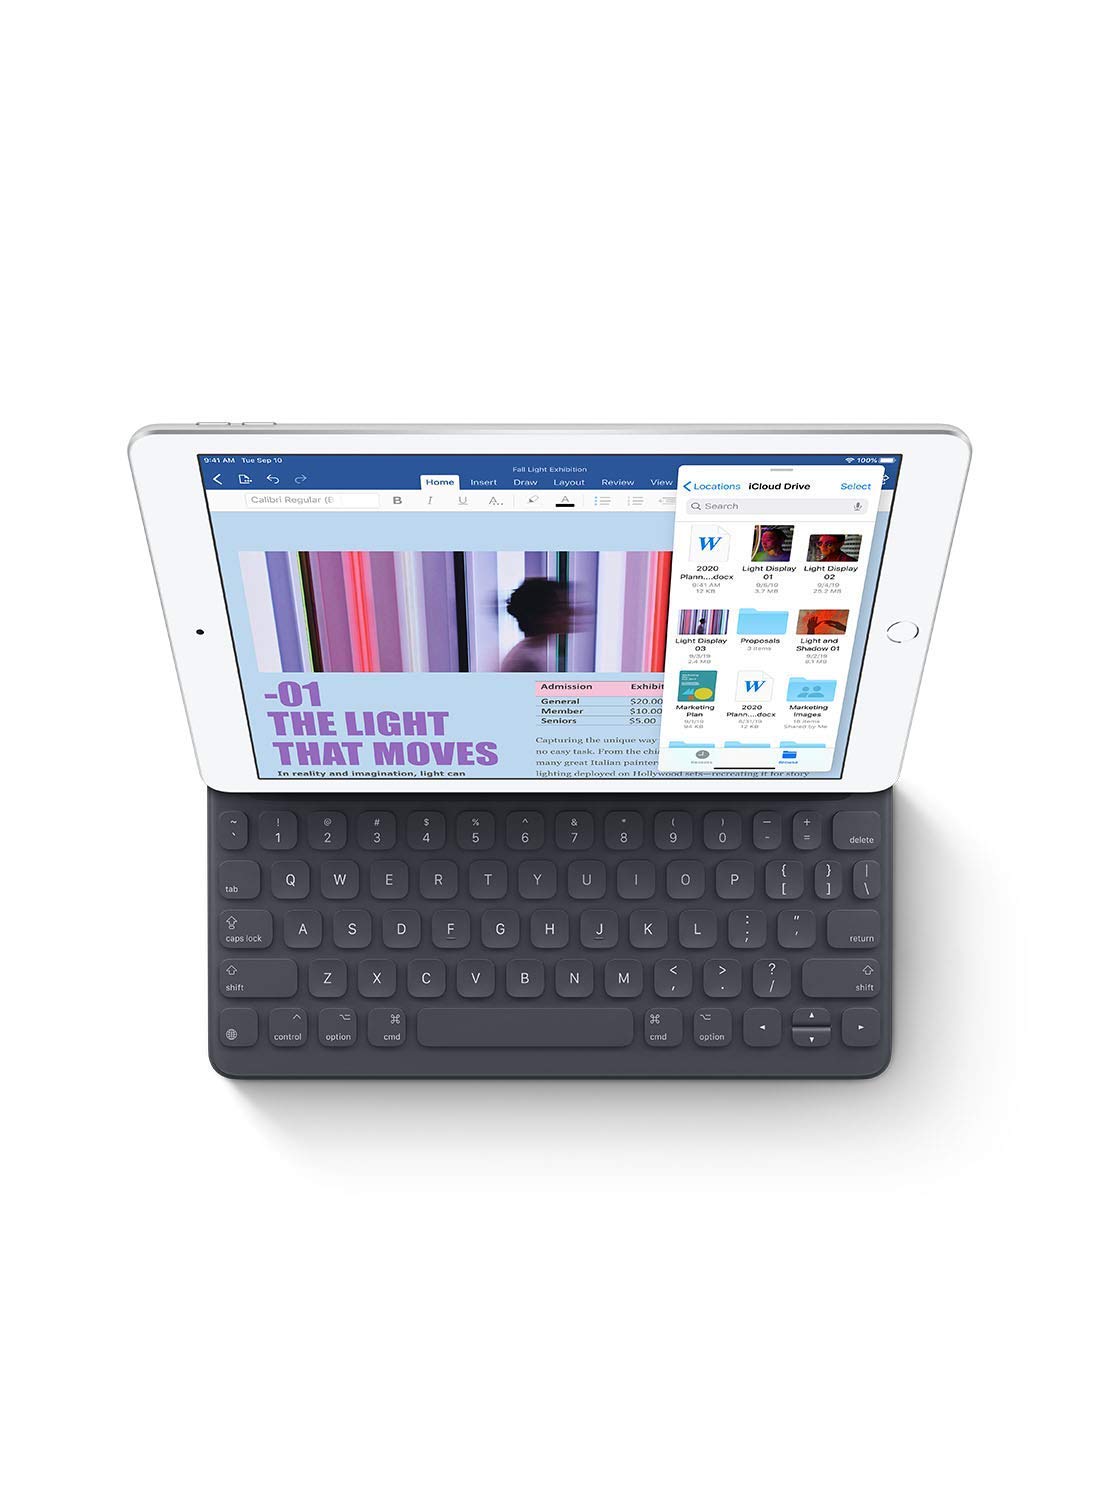 2019 Apple iPad (10.2-inch, Wi-Fi + Cellular, 128GB) - Space Gray (Renewed Premium)